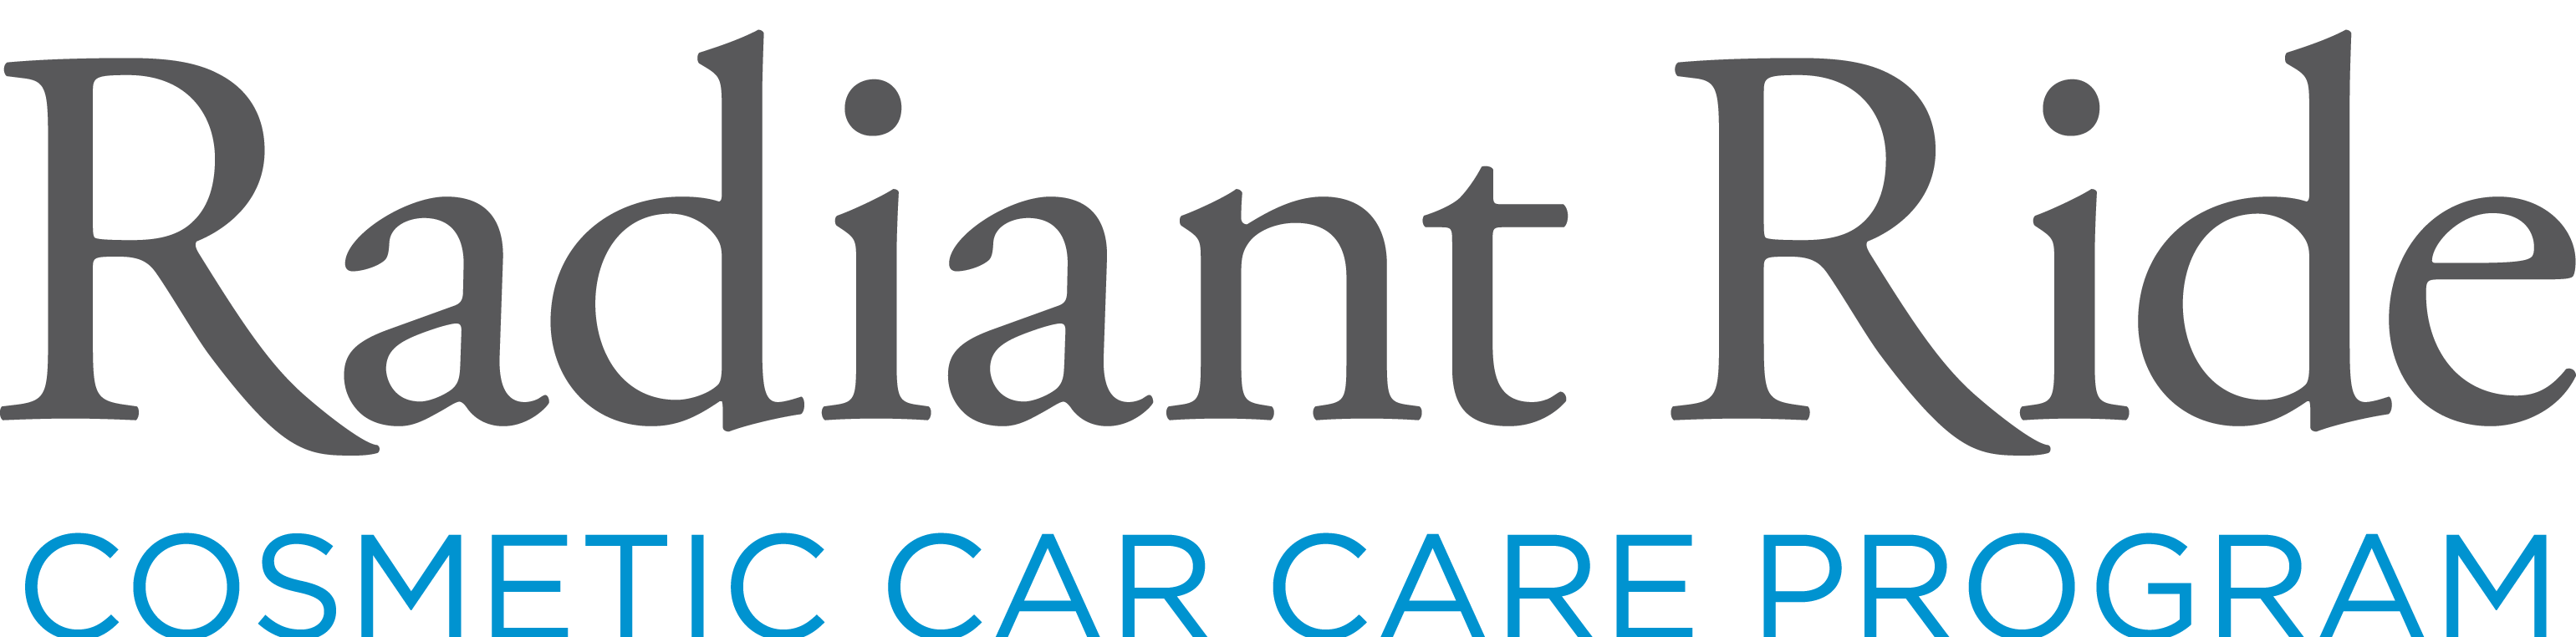 Radiant Ride Cosmetic Car Care Program